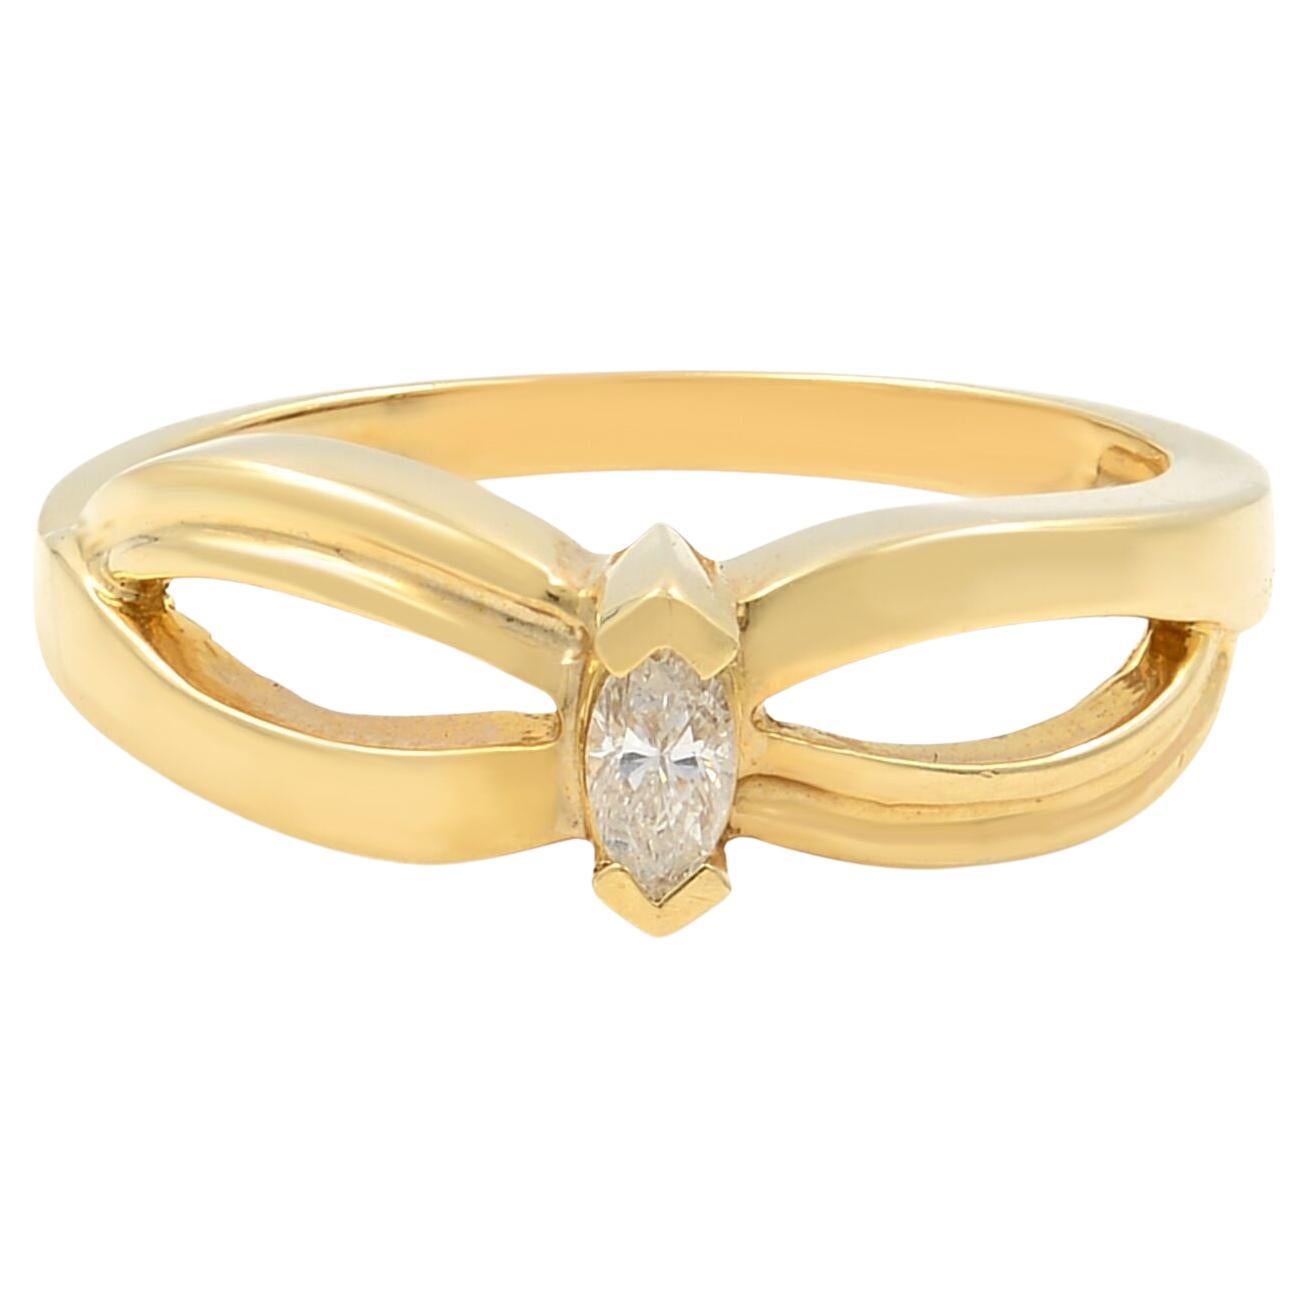 Rachel Koen Marquise Cut Diamond Ladies Ring 14K Yellow Gold 0.12Cttw For Sale